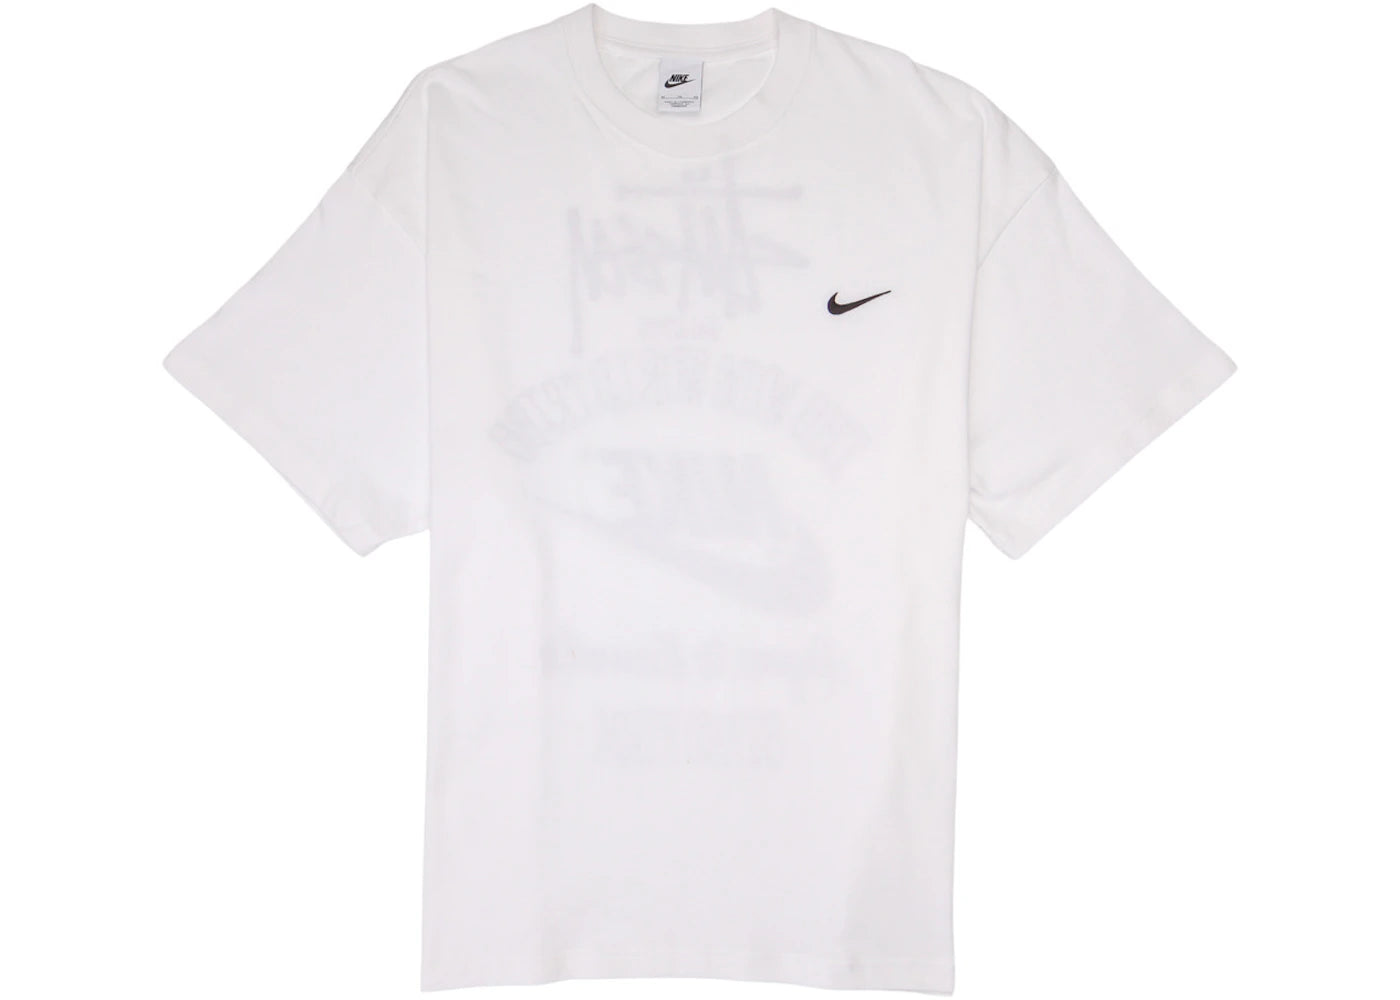 Nike x Stussy The Wide World Tribe T-Shirt White - OnSize